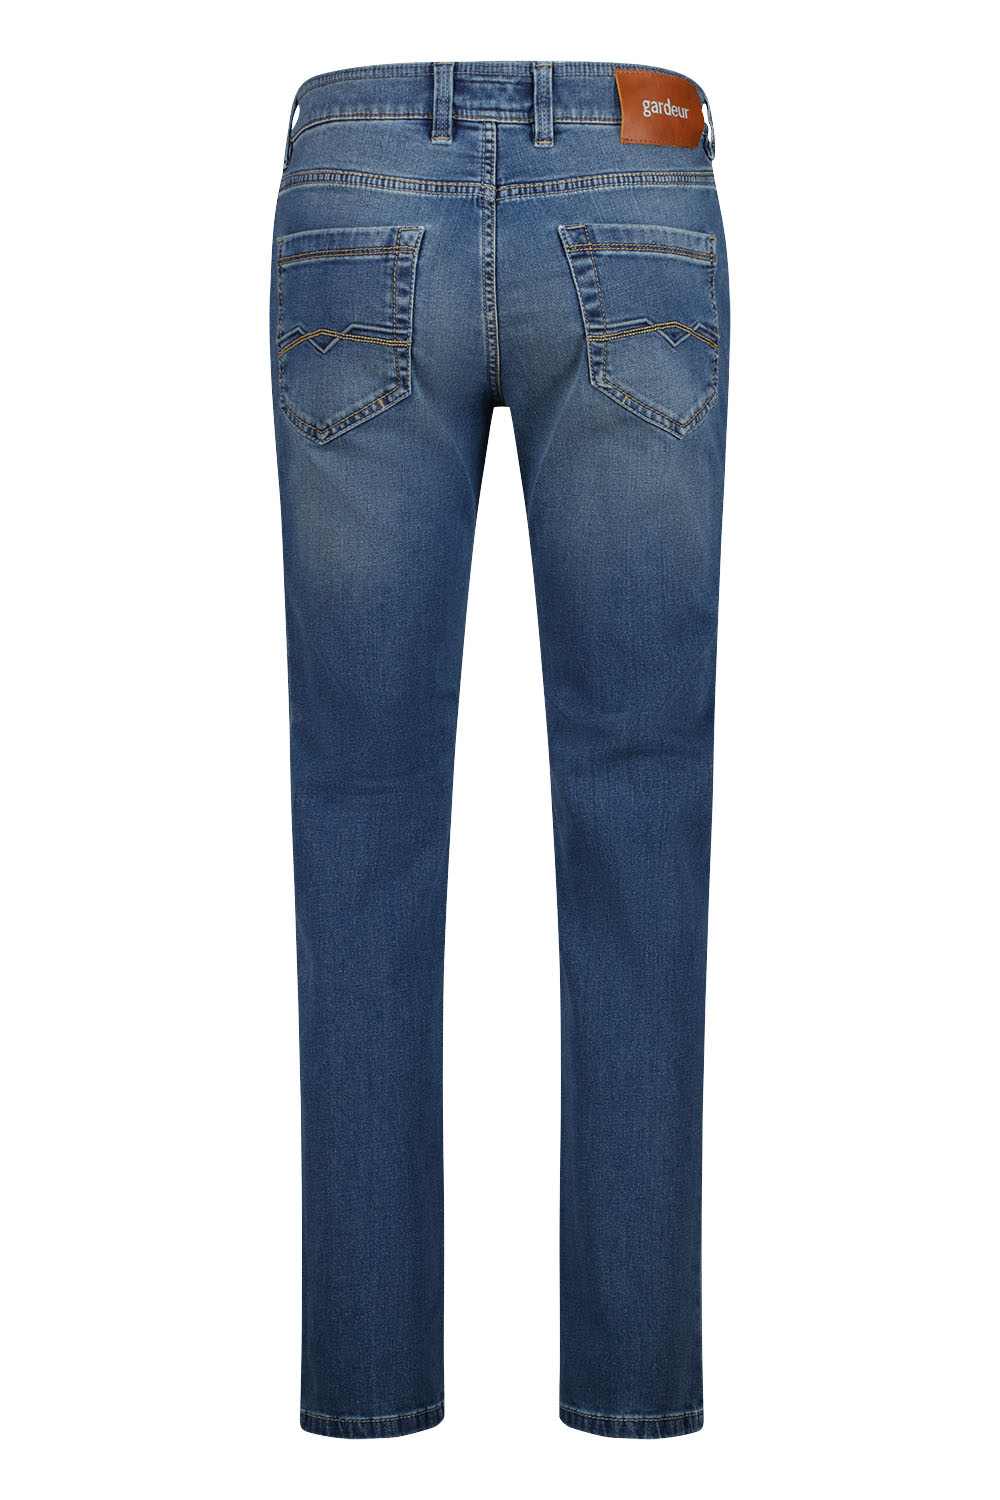 Gardeur - Batu Jeans Indigo Blauw - Maat W 38 - L 36 - Modern-fit